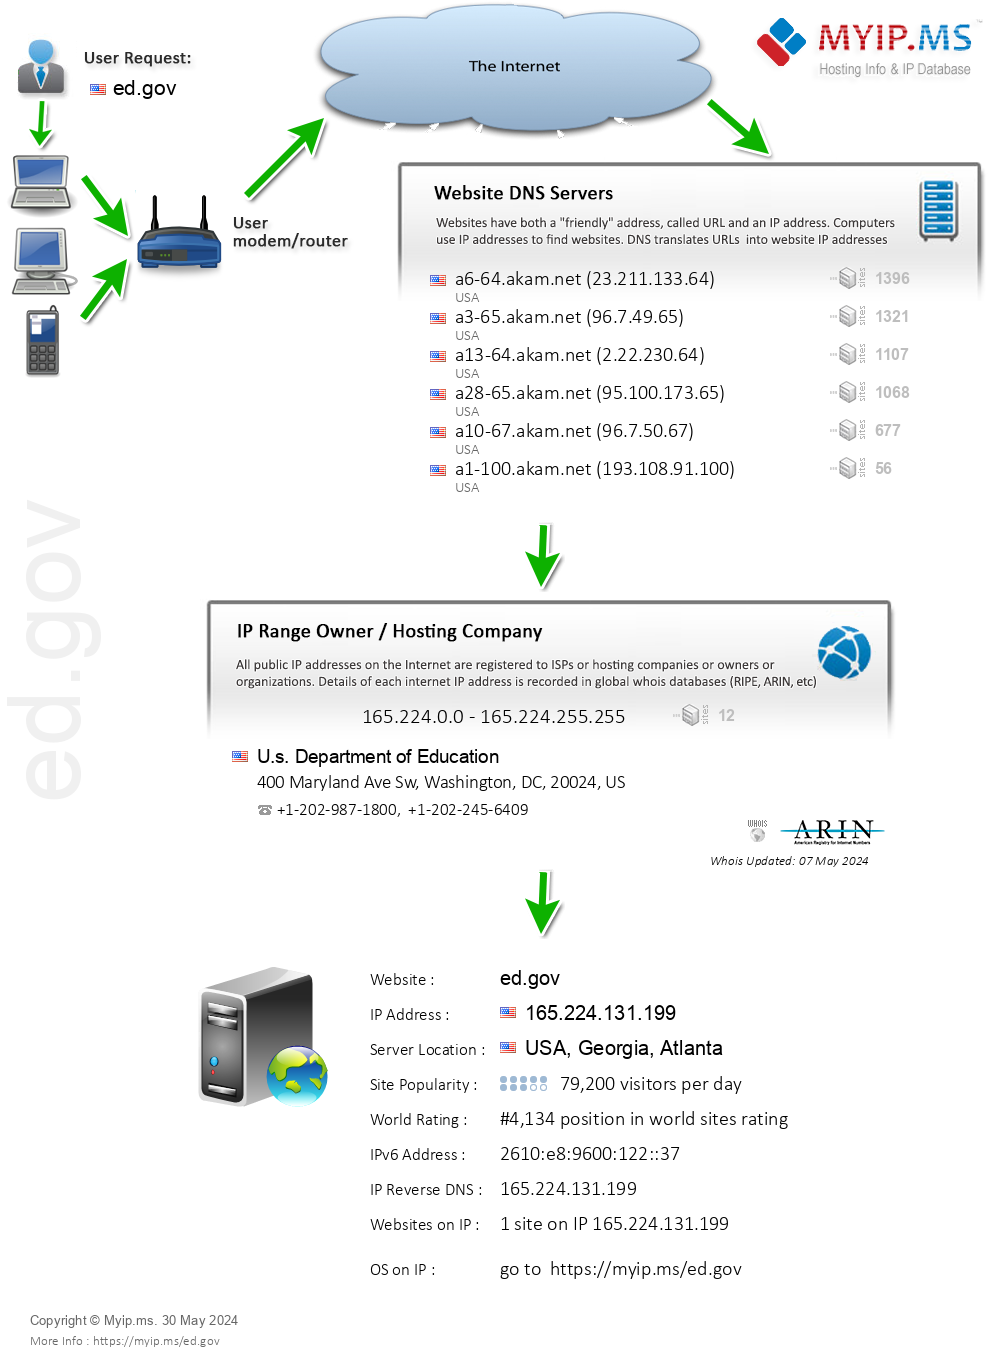 Ed.gov - Website Hosting Visual IP Diagram